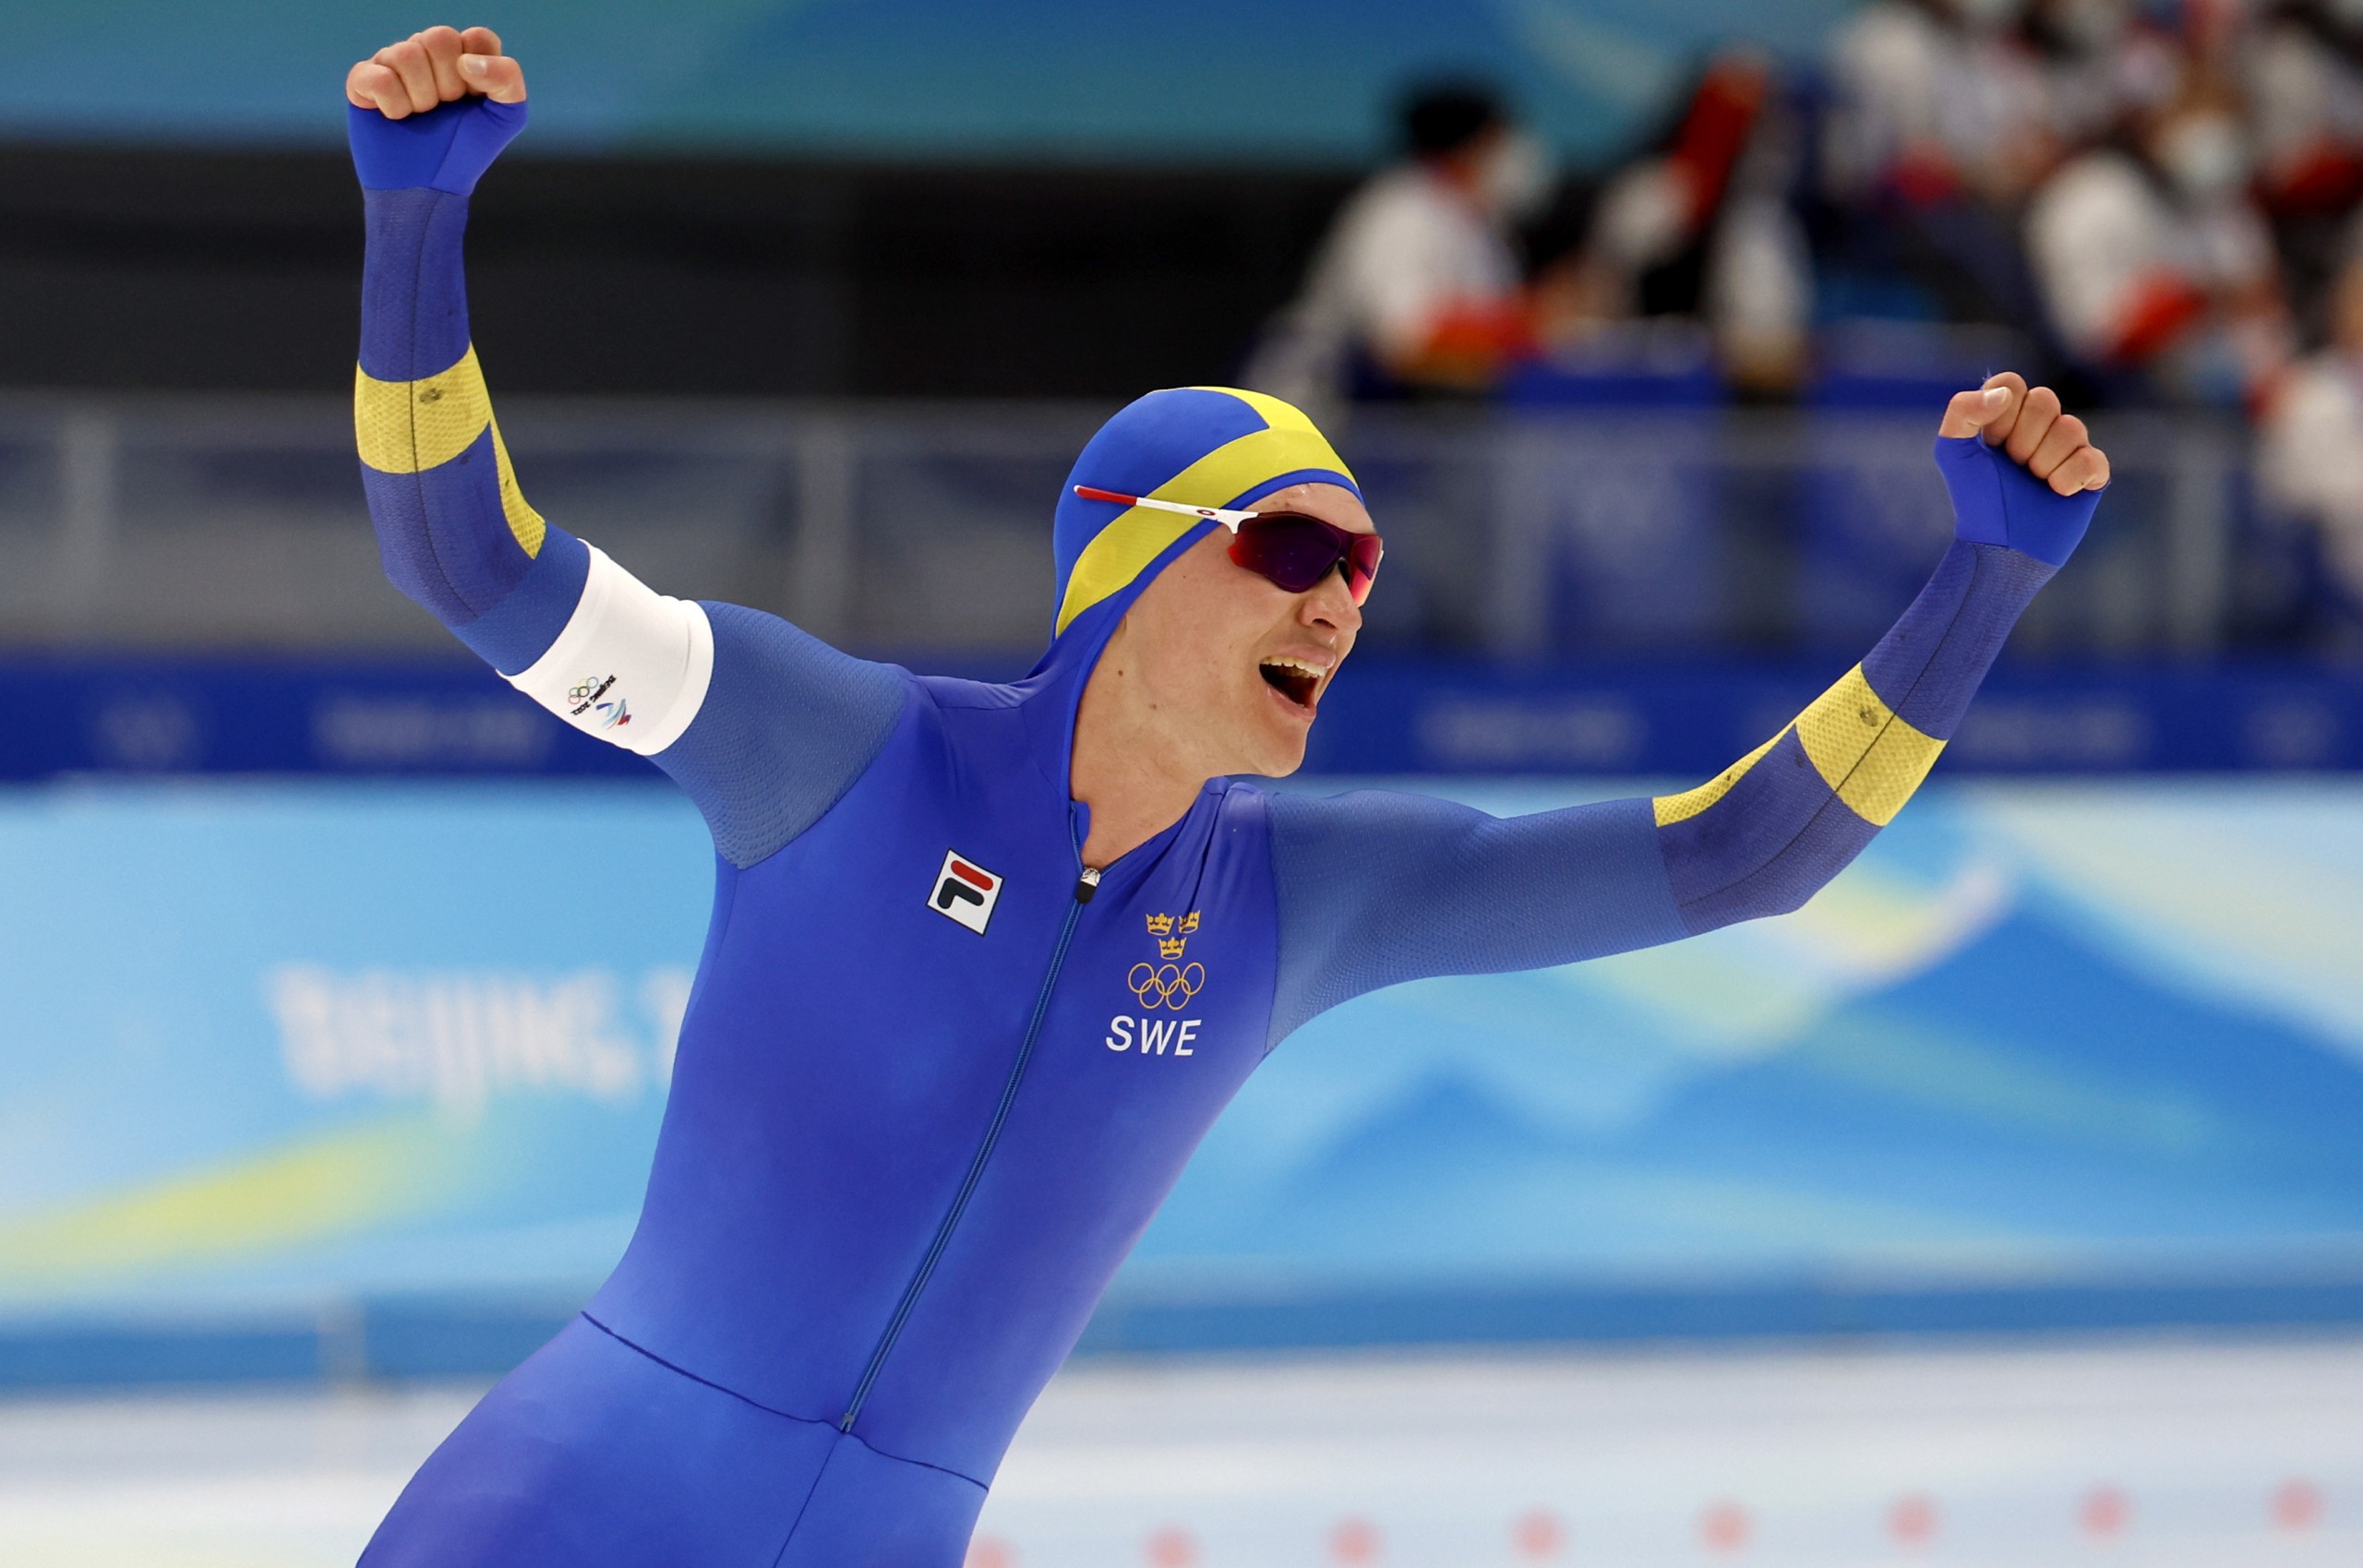 epa09732112 Golden medalist Nils van der Poel of Sweden celebrates after winning the Men's Speed Skating 5000m event at the Beijing 2022 Olympic Games, Beijing, China, 06 February 2022.  EPA/ALEX PLAVEVSKI